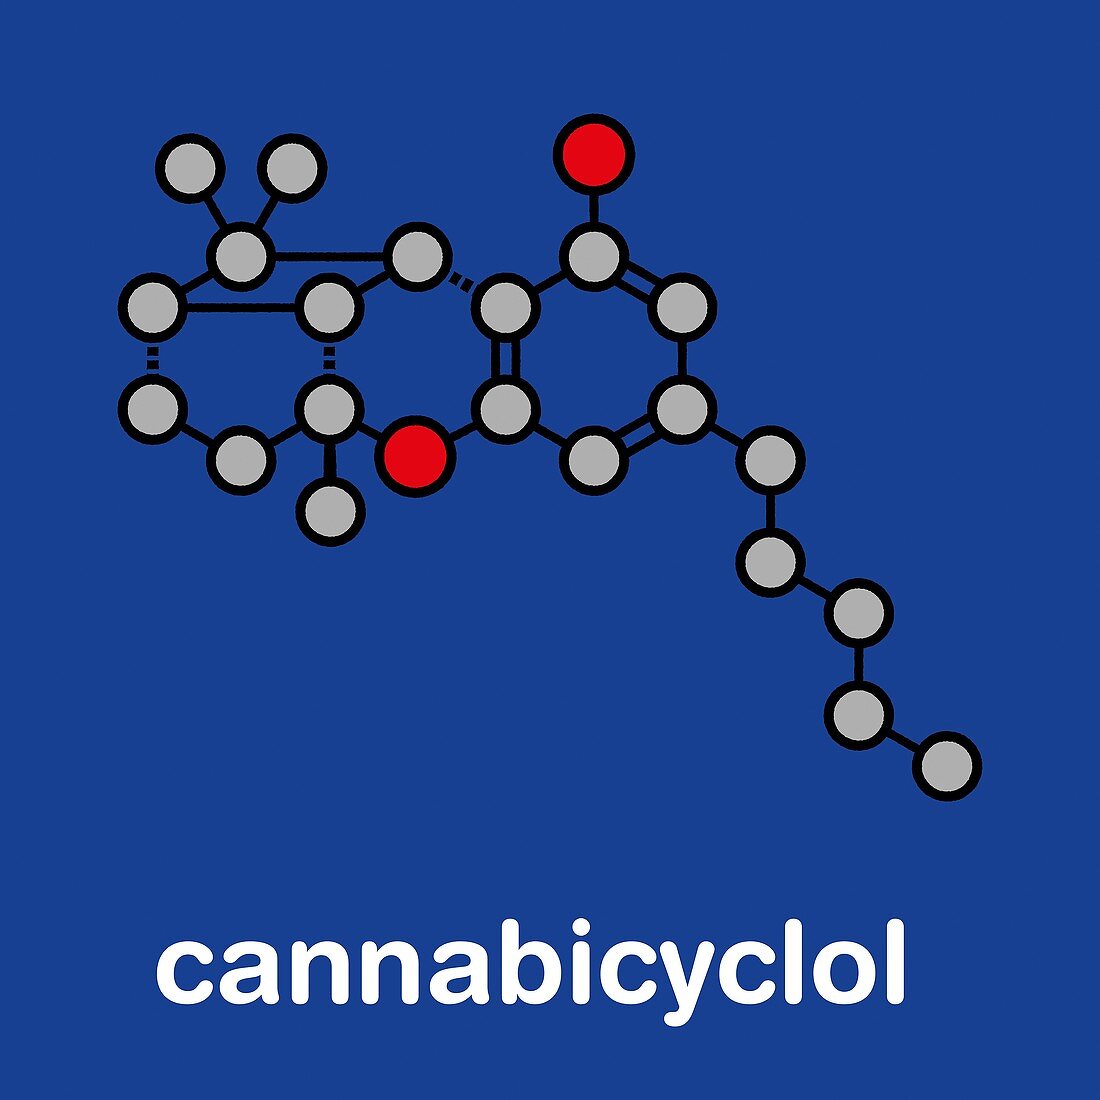 Cannabicyclol cannabinoid molecule, illustration